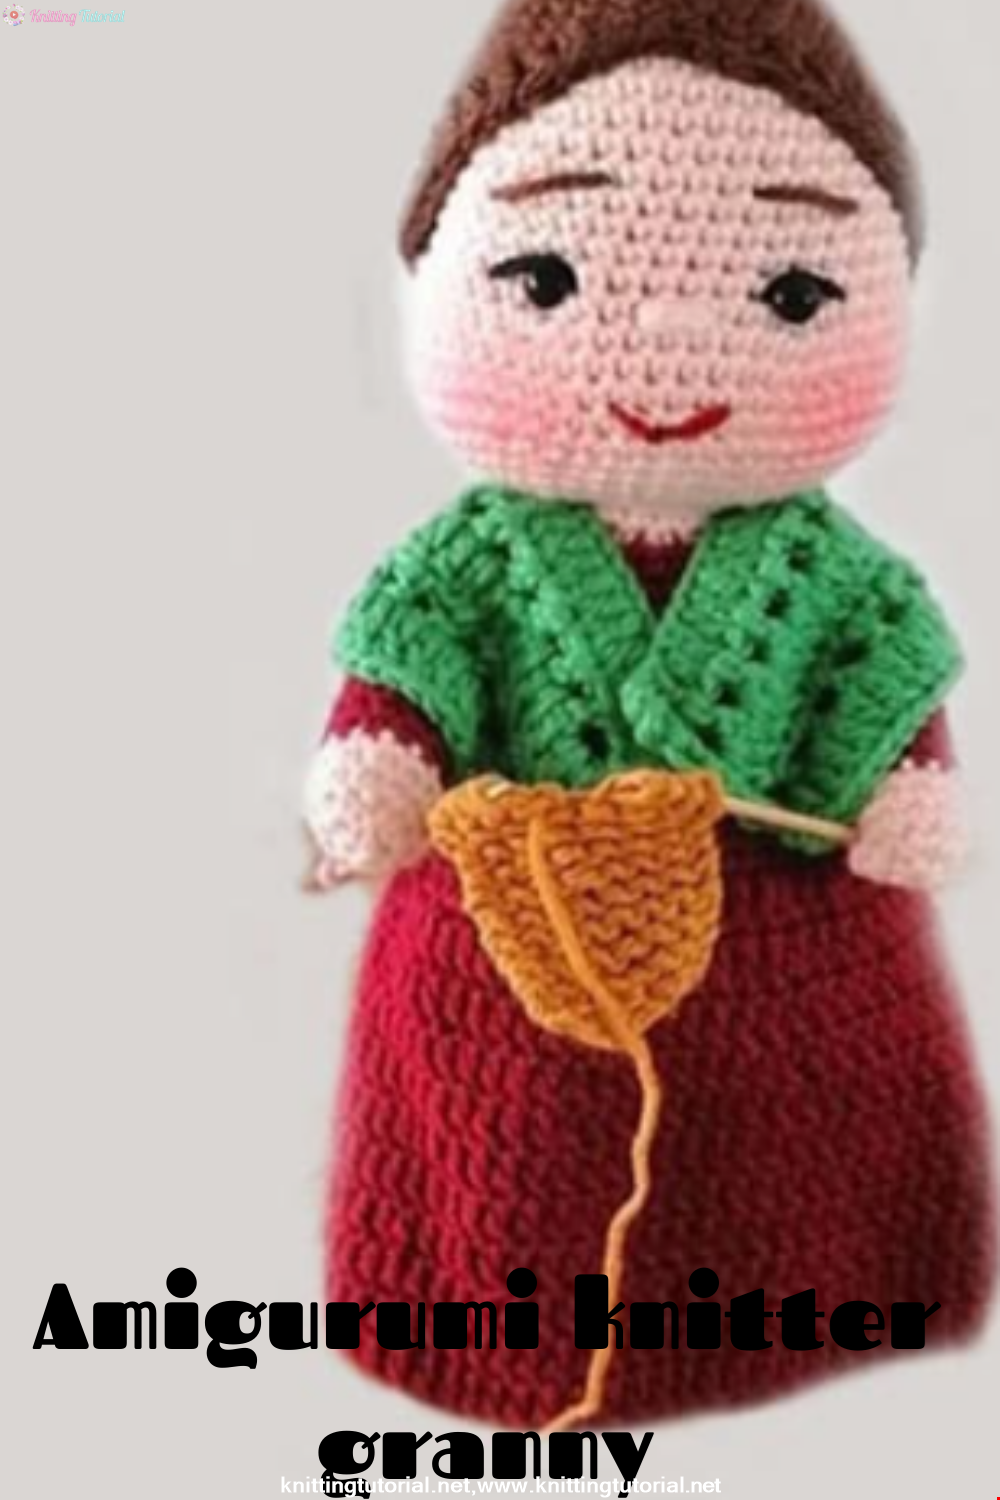 Amigurumi knitter granny recipe and making